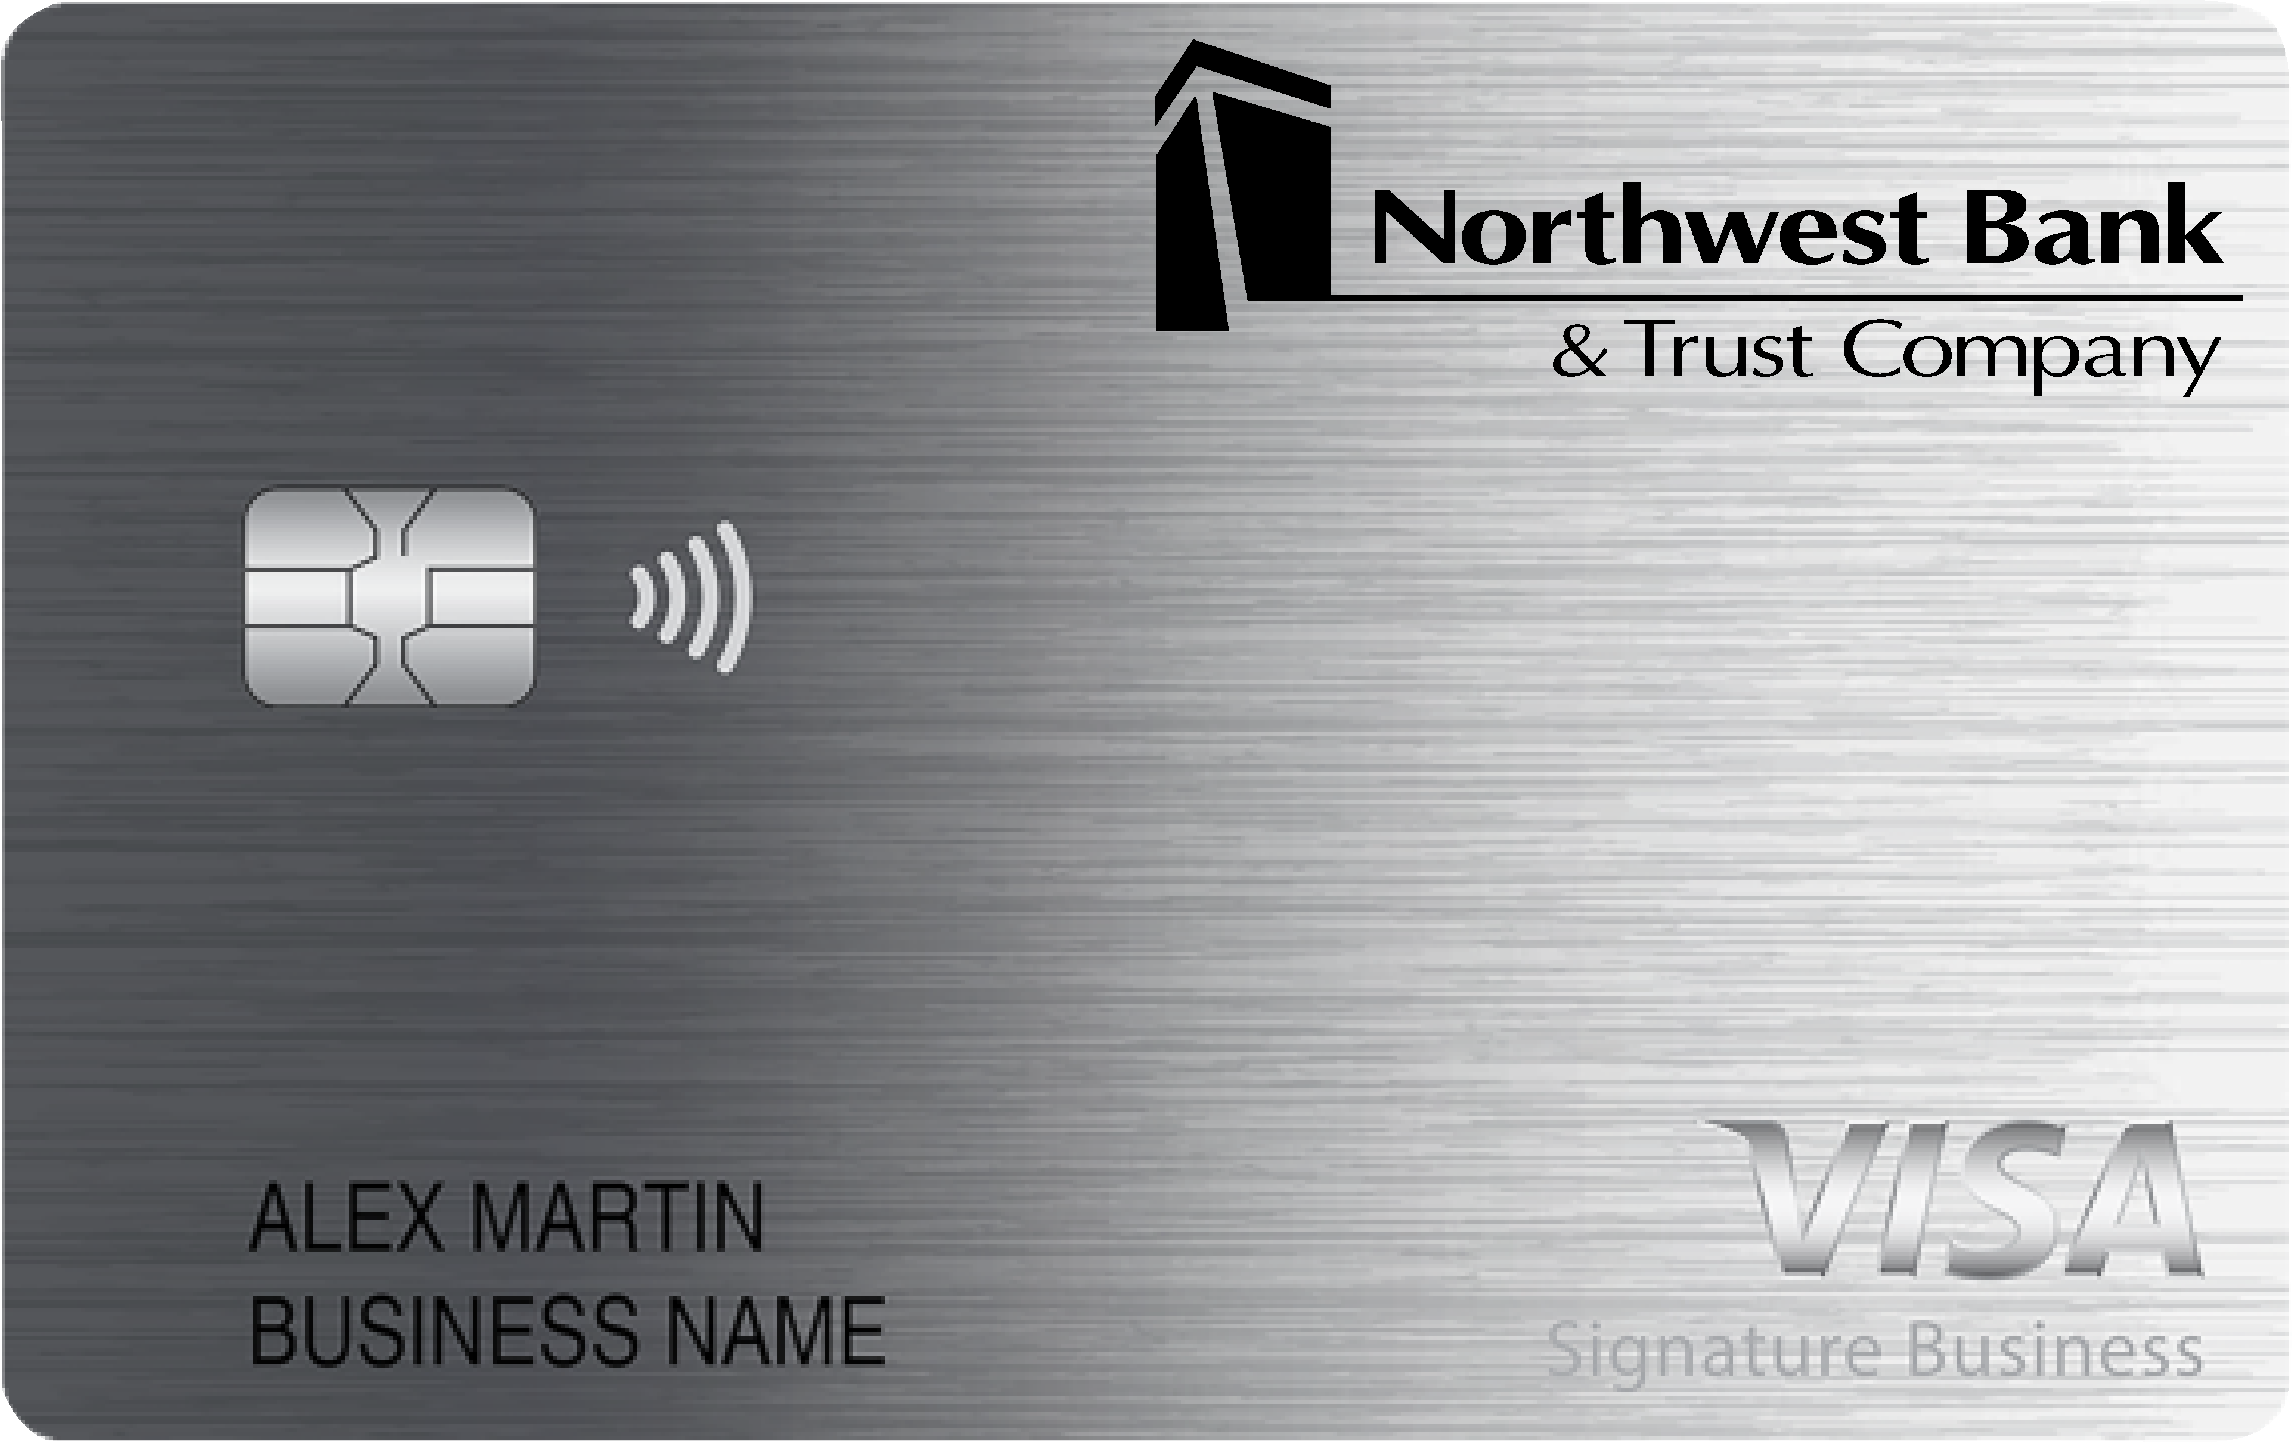 Northwest Bank & Trust Company Smart Business Rewards Card